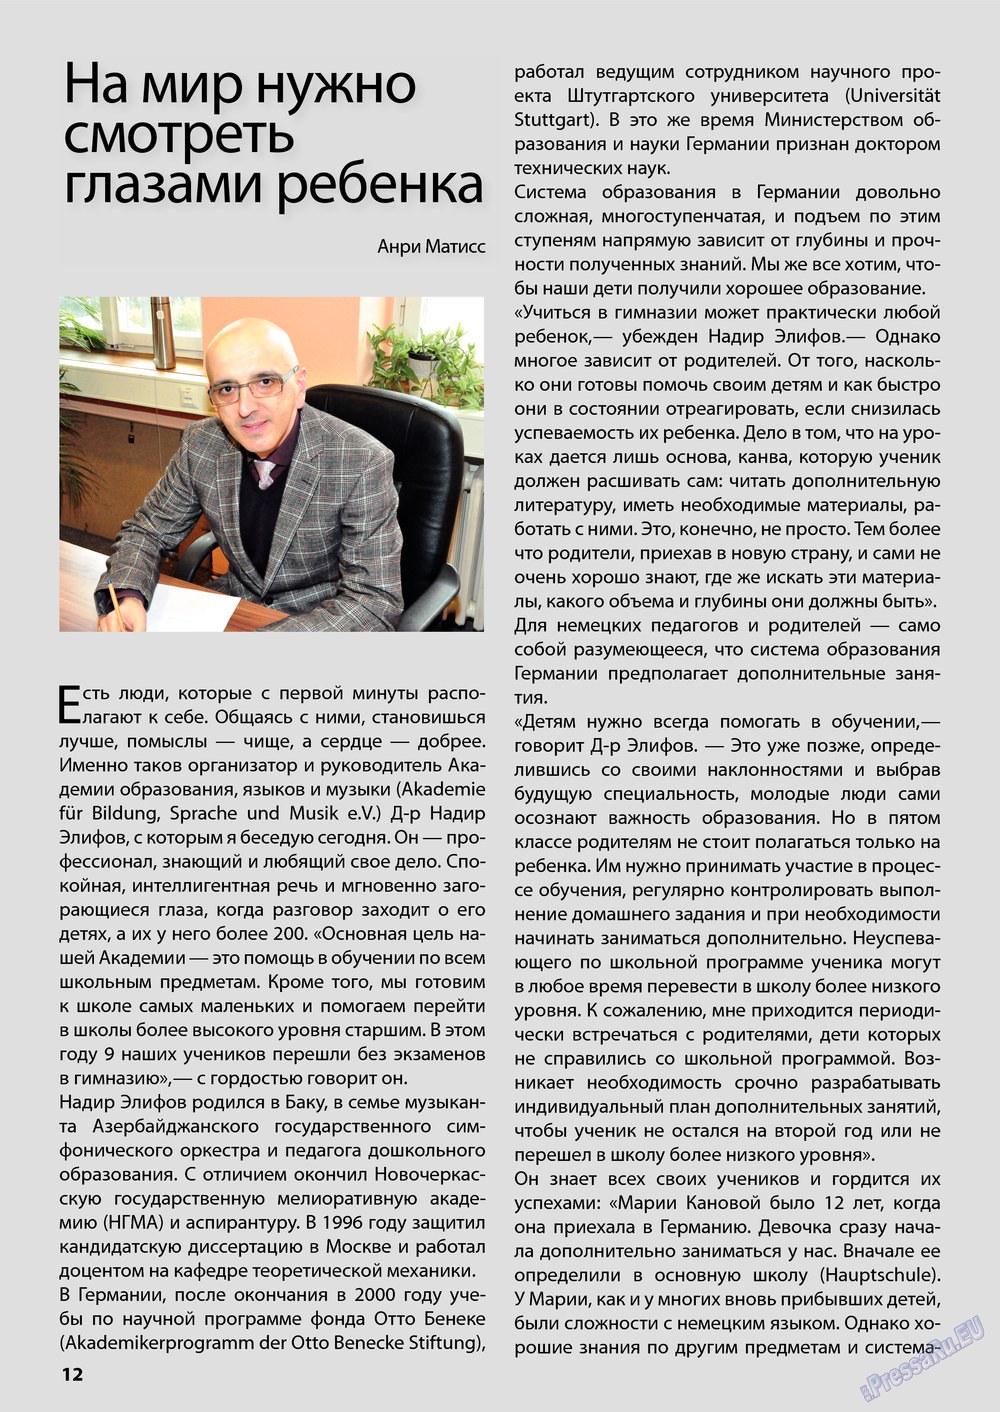 Wadim, журнал. 2013 №6 стр.12